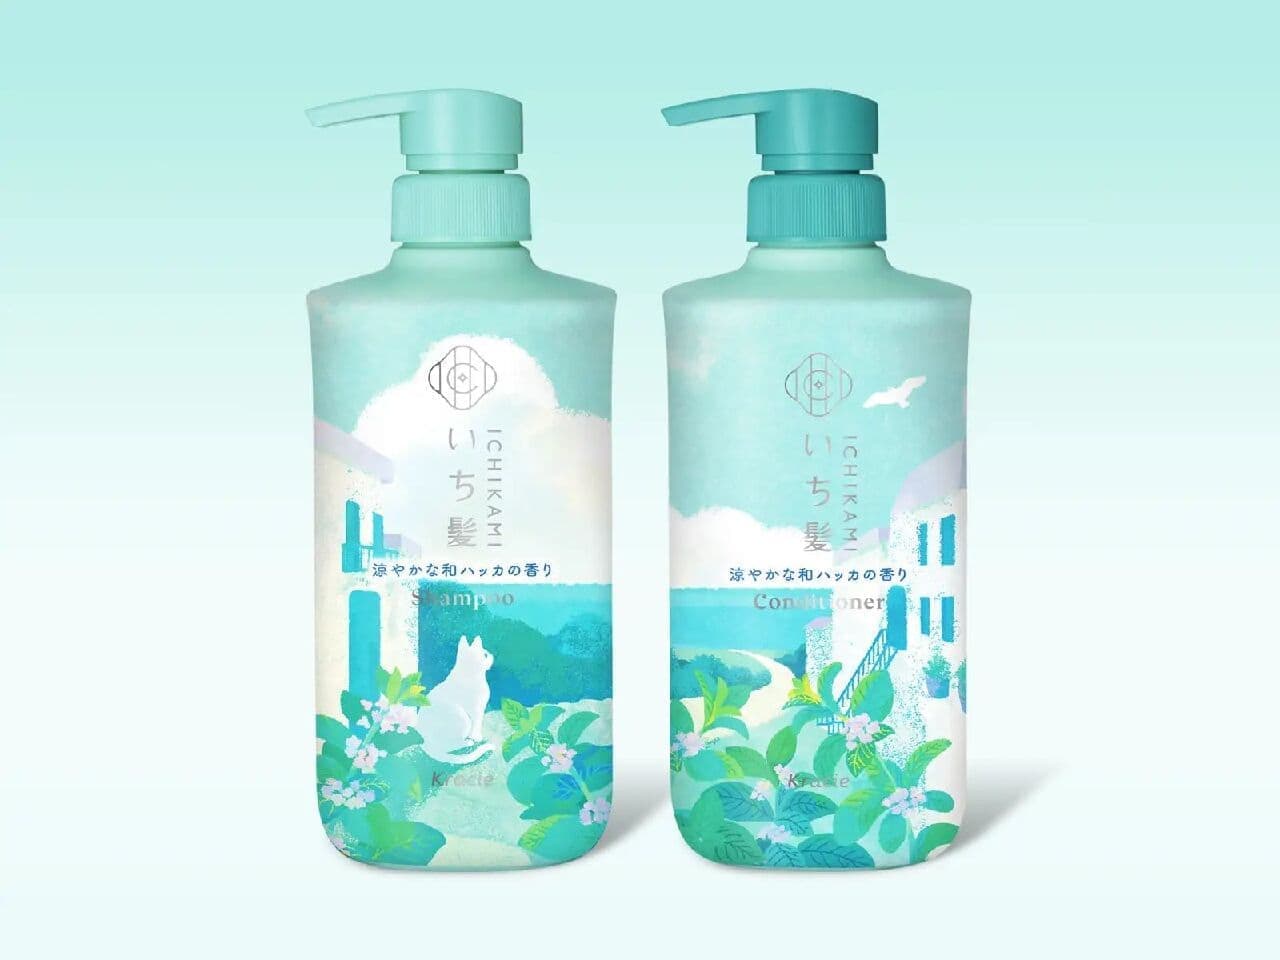 Ichikami Shampoo & Conditioner (Cool Japanese Mint Scent)